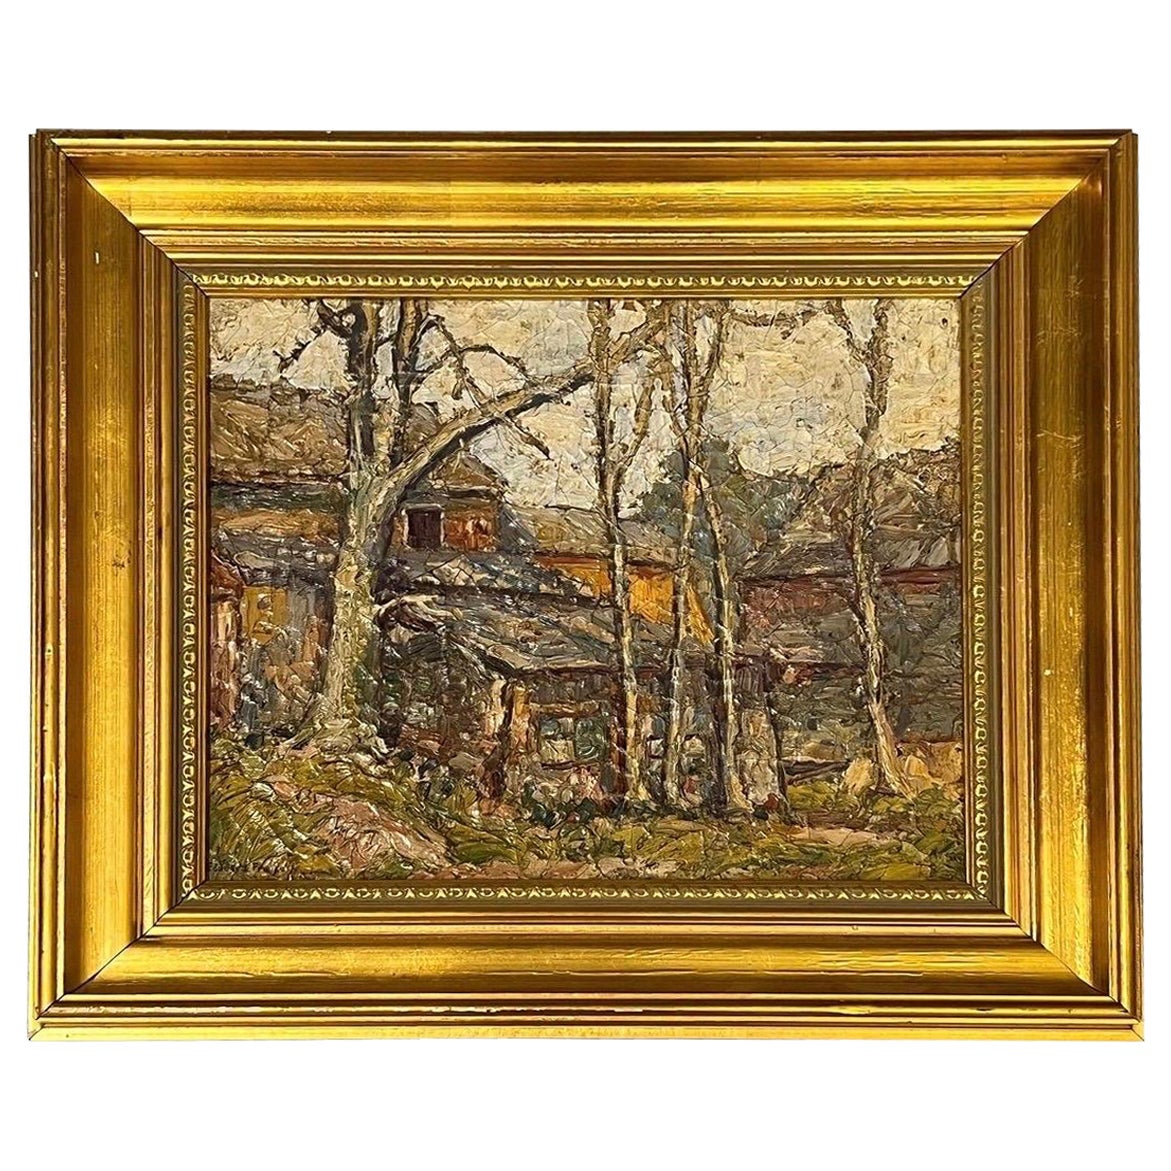 Edouard Franke “Chatham Mass, Farmscape” Antique American Impressionist